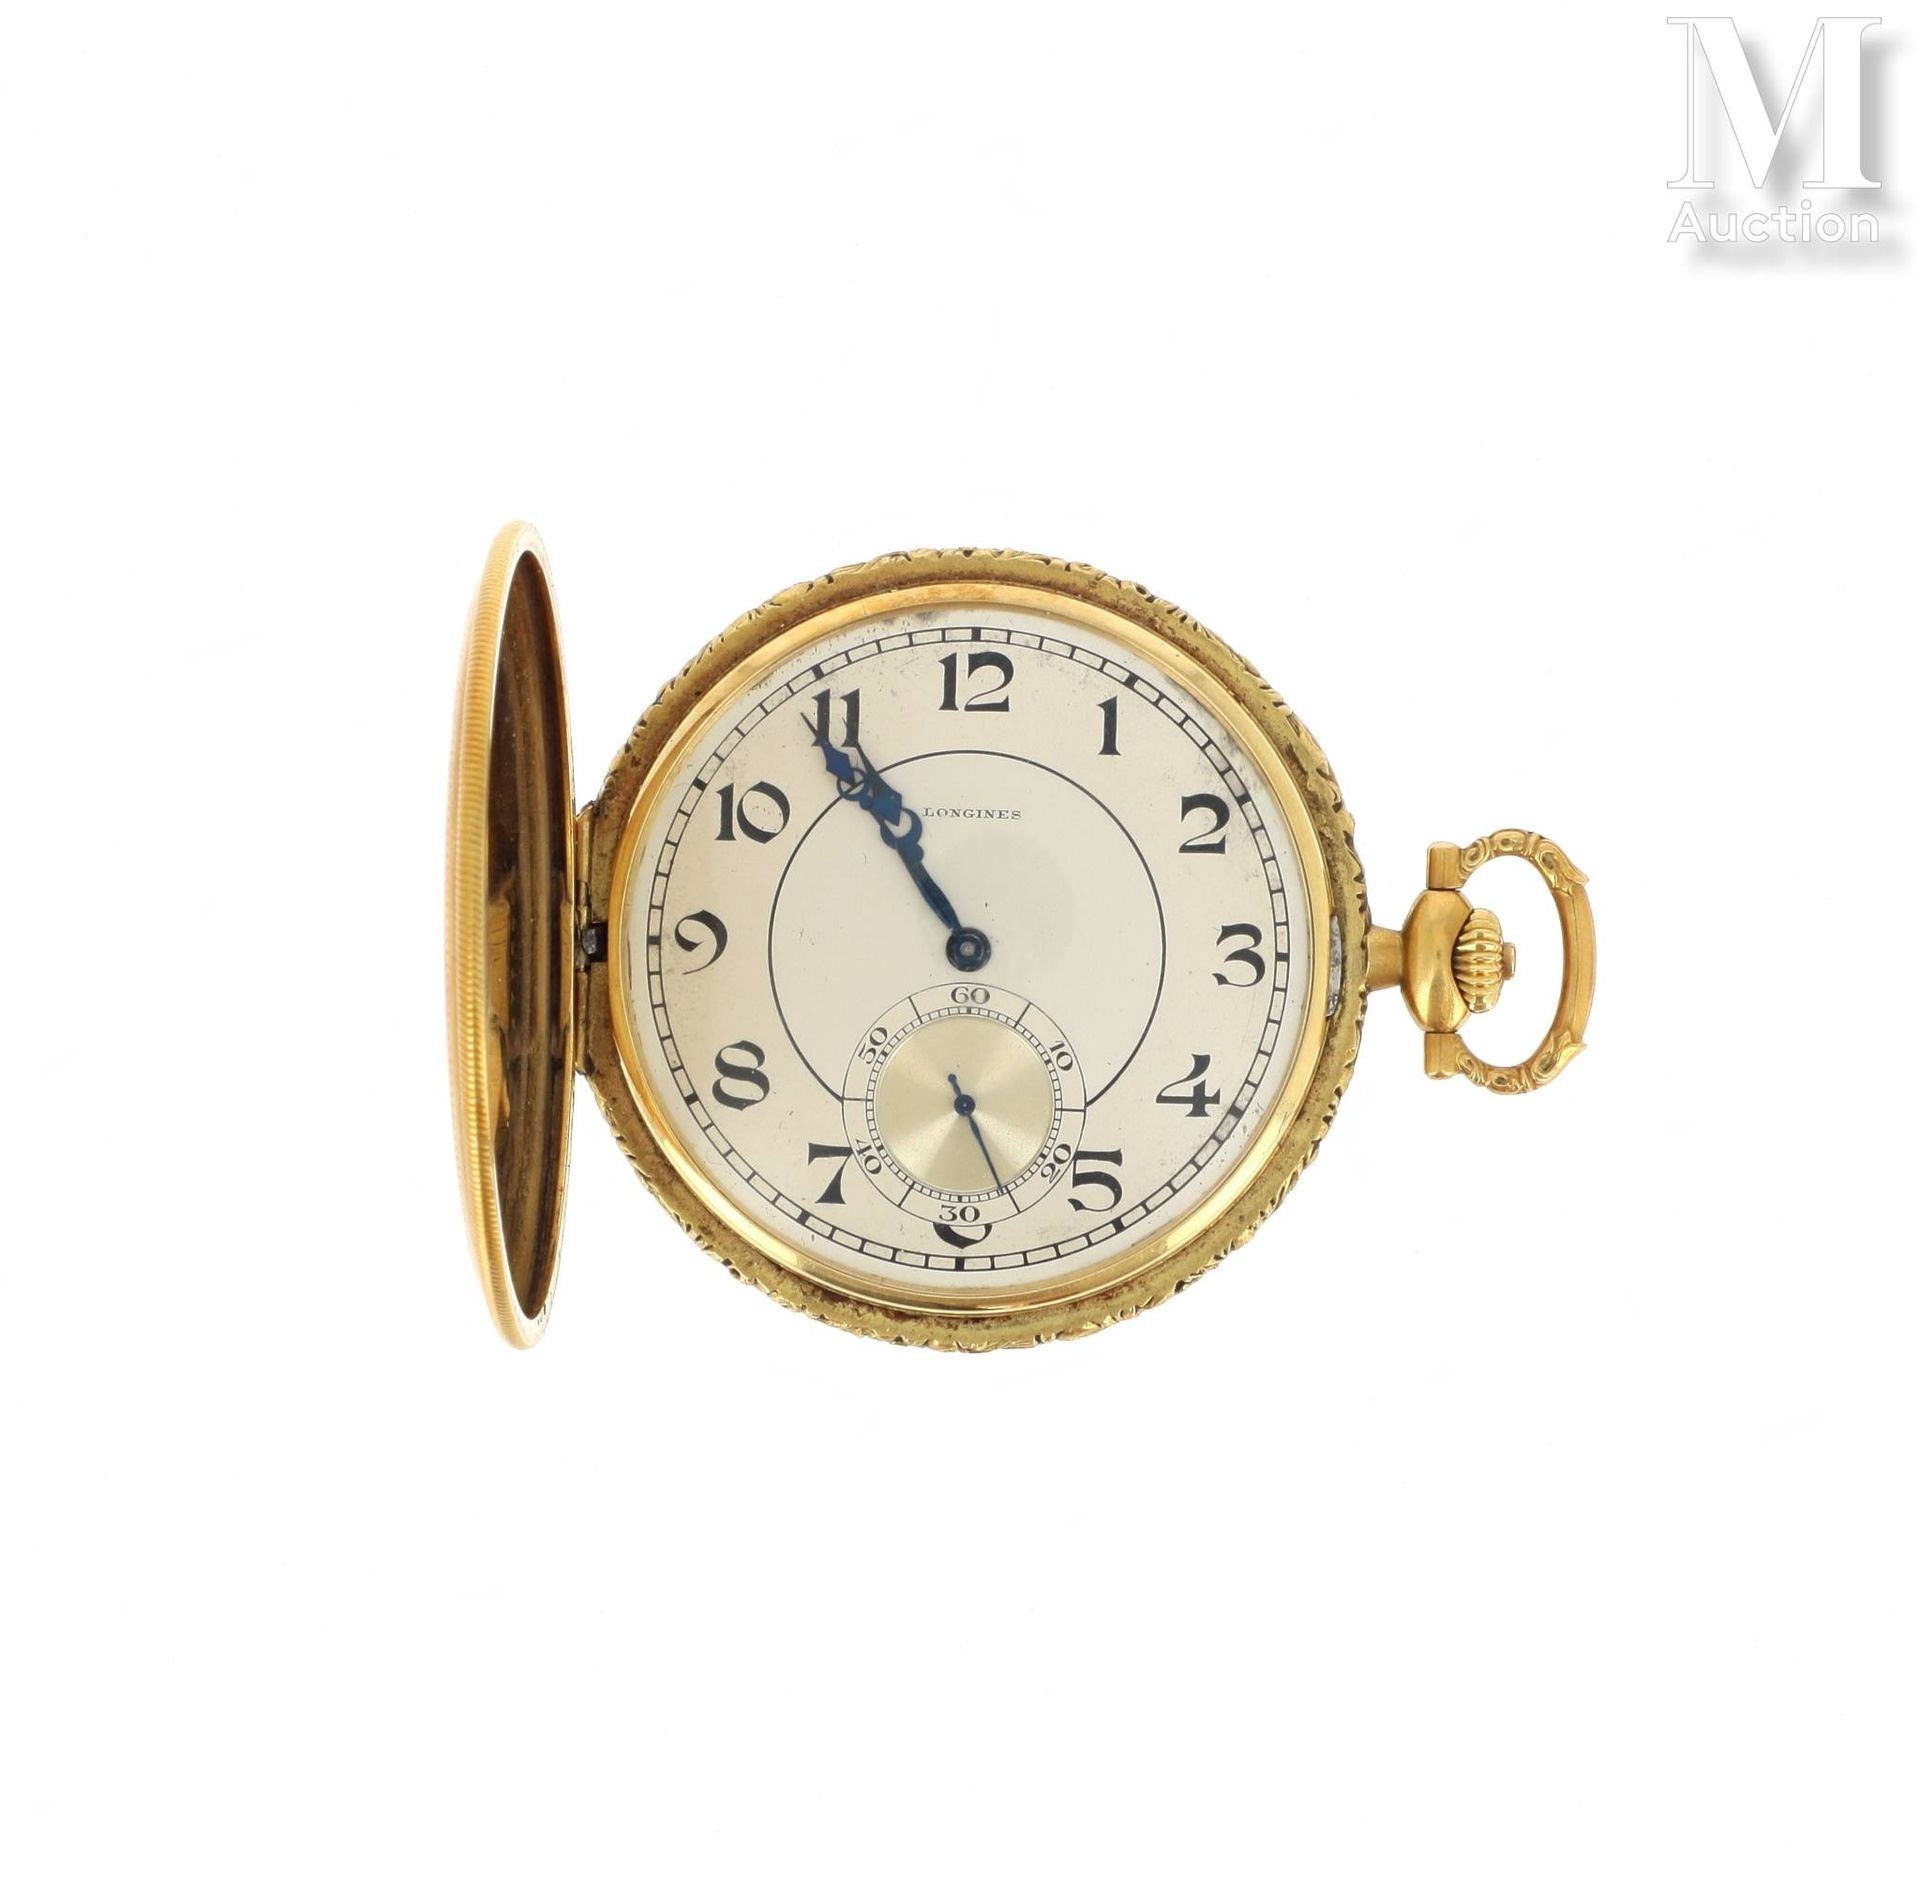 MONTRE DE POCHE LONGINES LONGINES

Reloj de bolsillo de oro amarillo y blanco de&hellip;